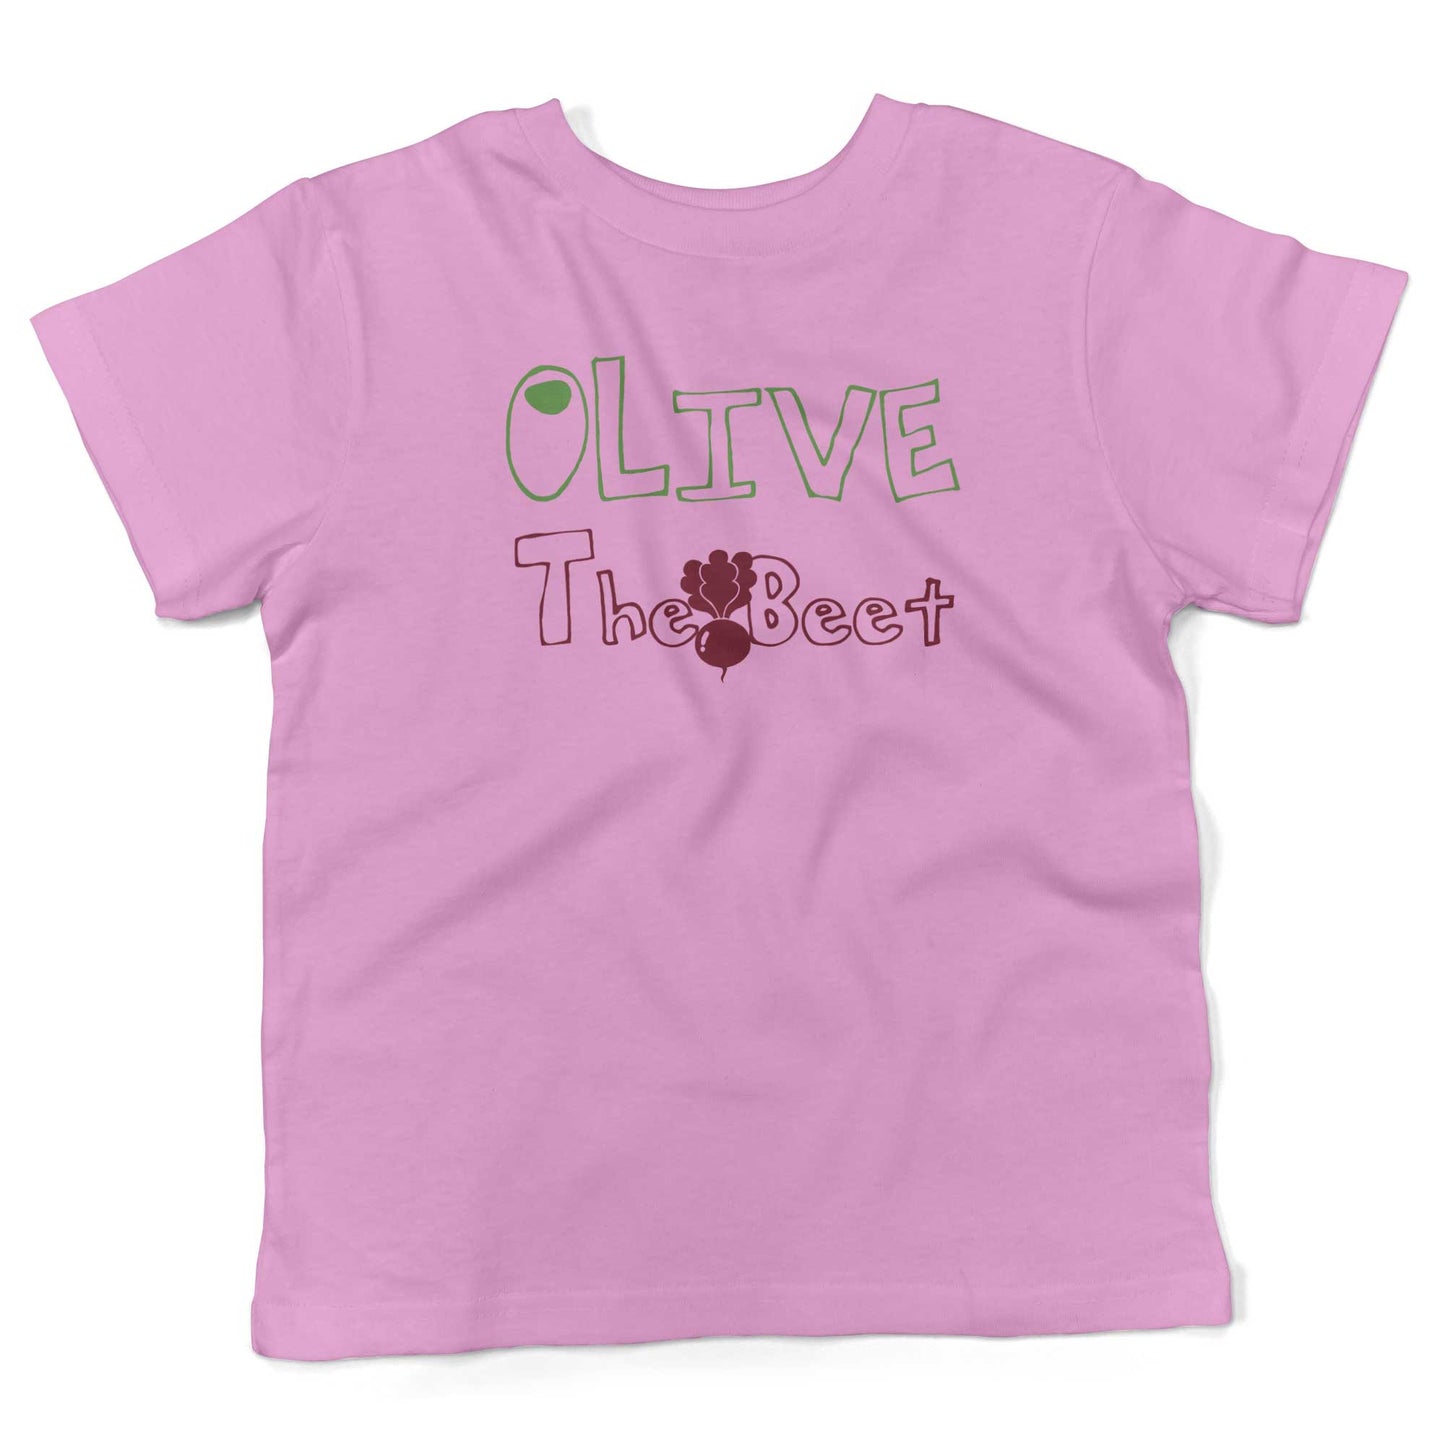 Olive The Beet Toddler Shirt-Organic Pink-2T